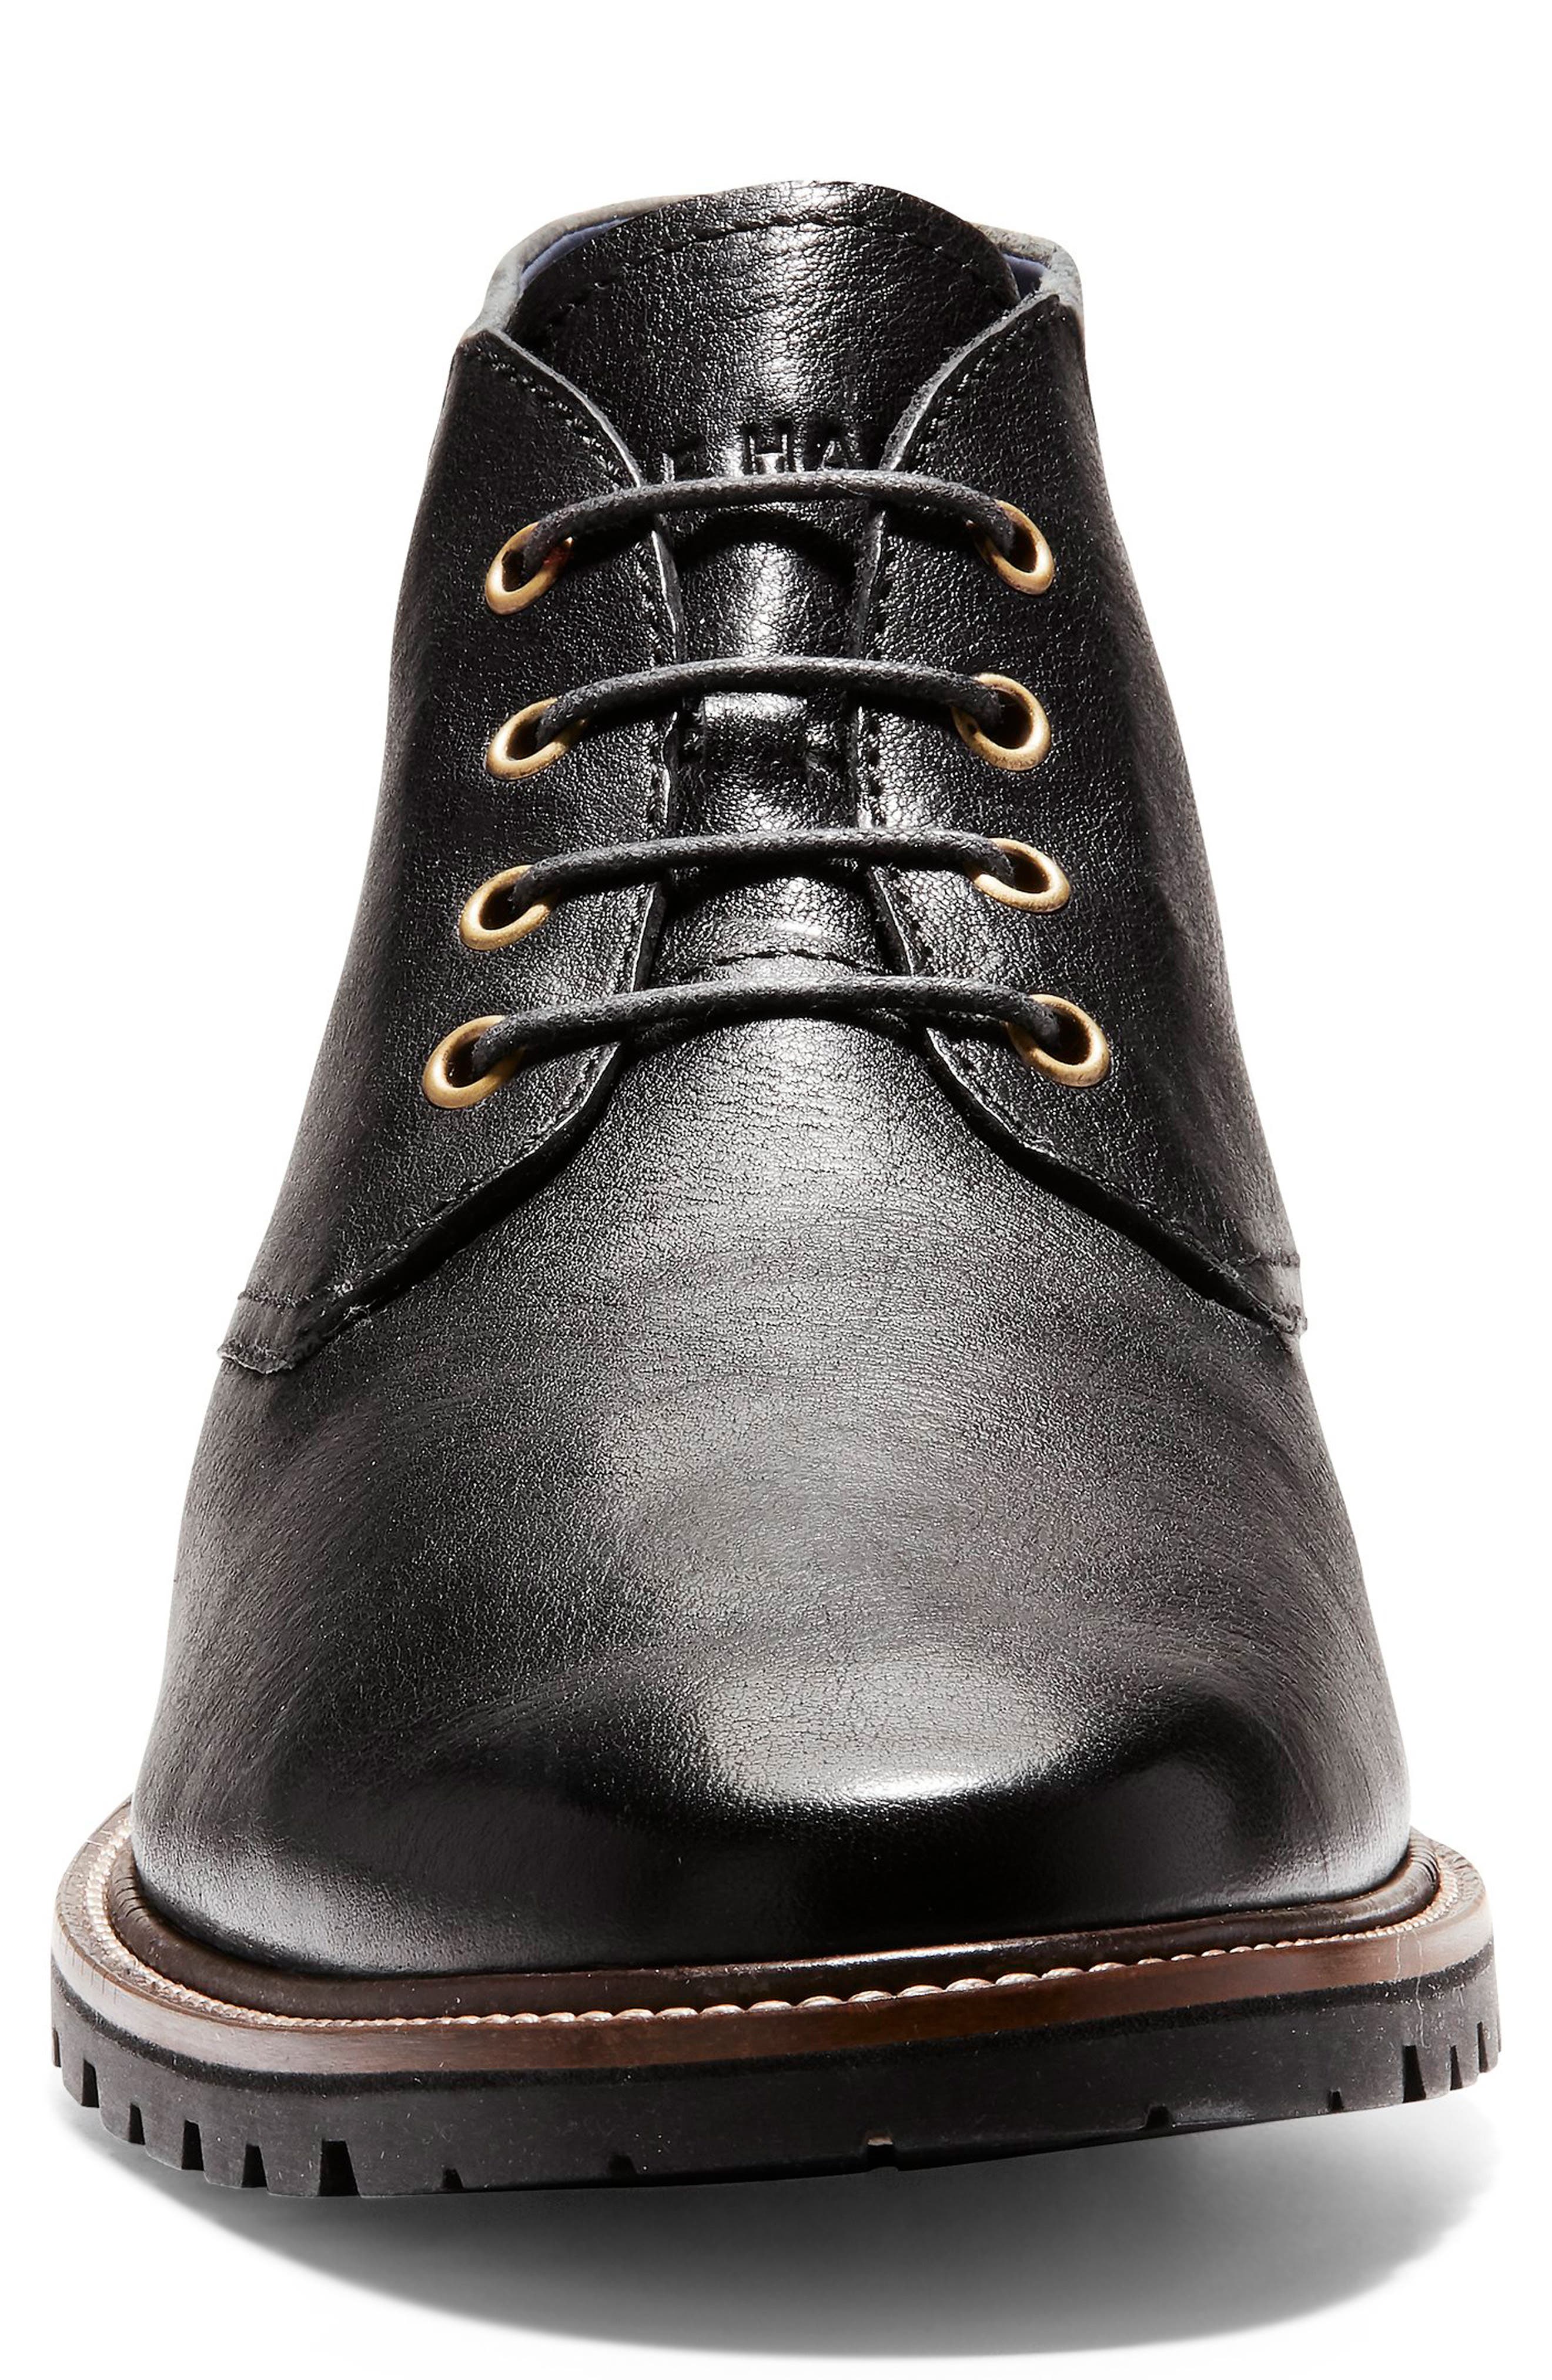 ripley grand leather chukka boot